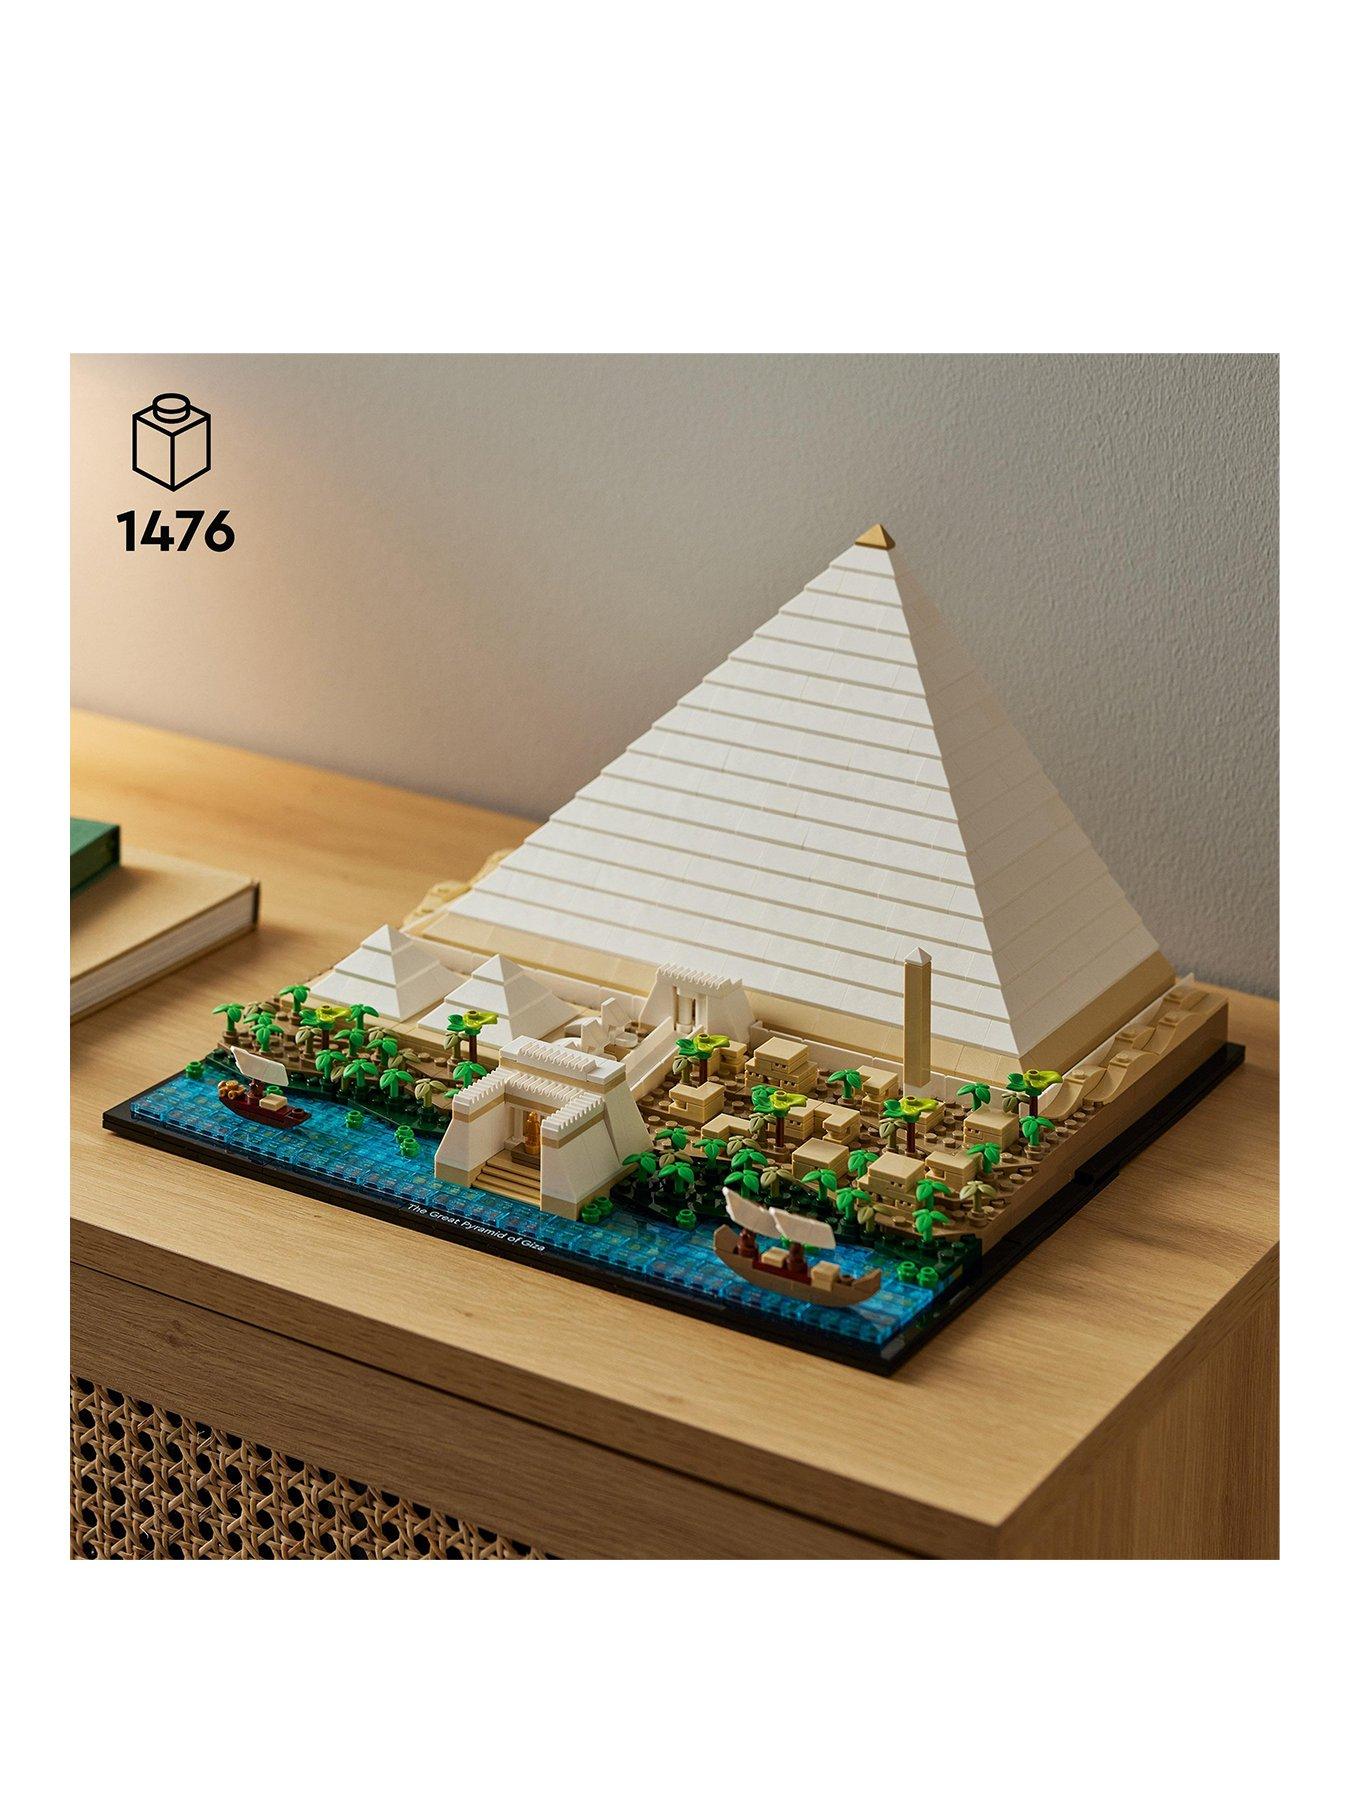 LEGO Great Pyramid of Giza 21058 Light Kit